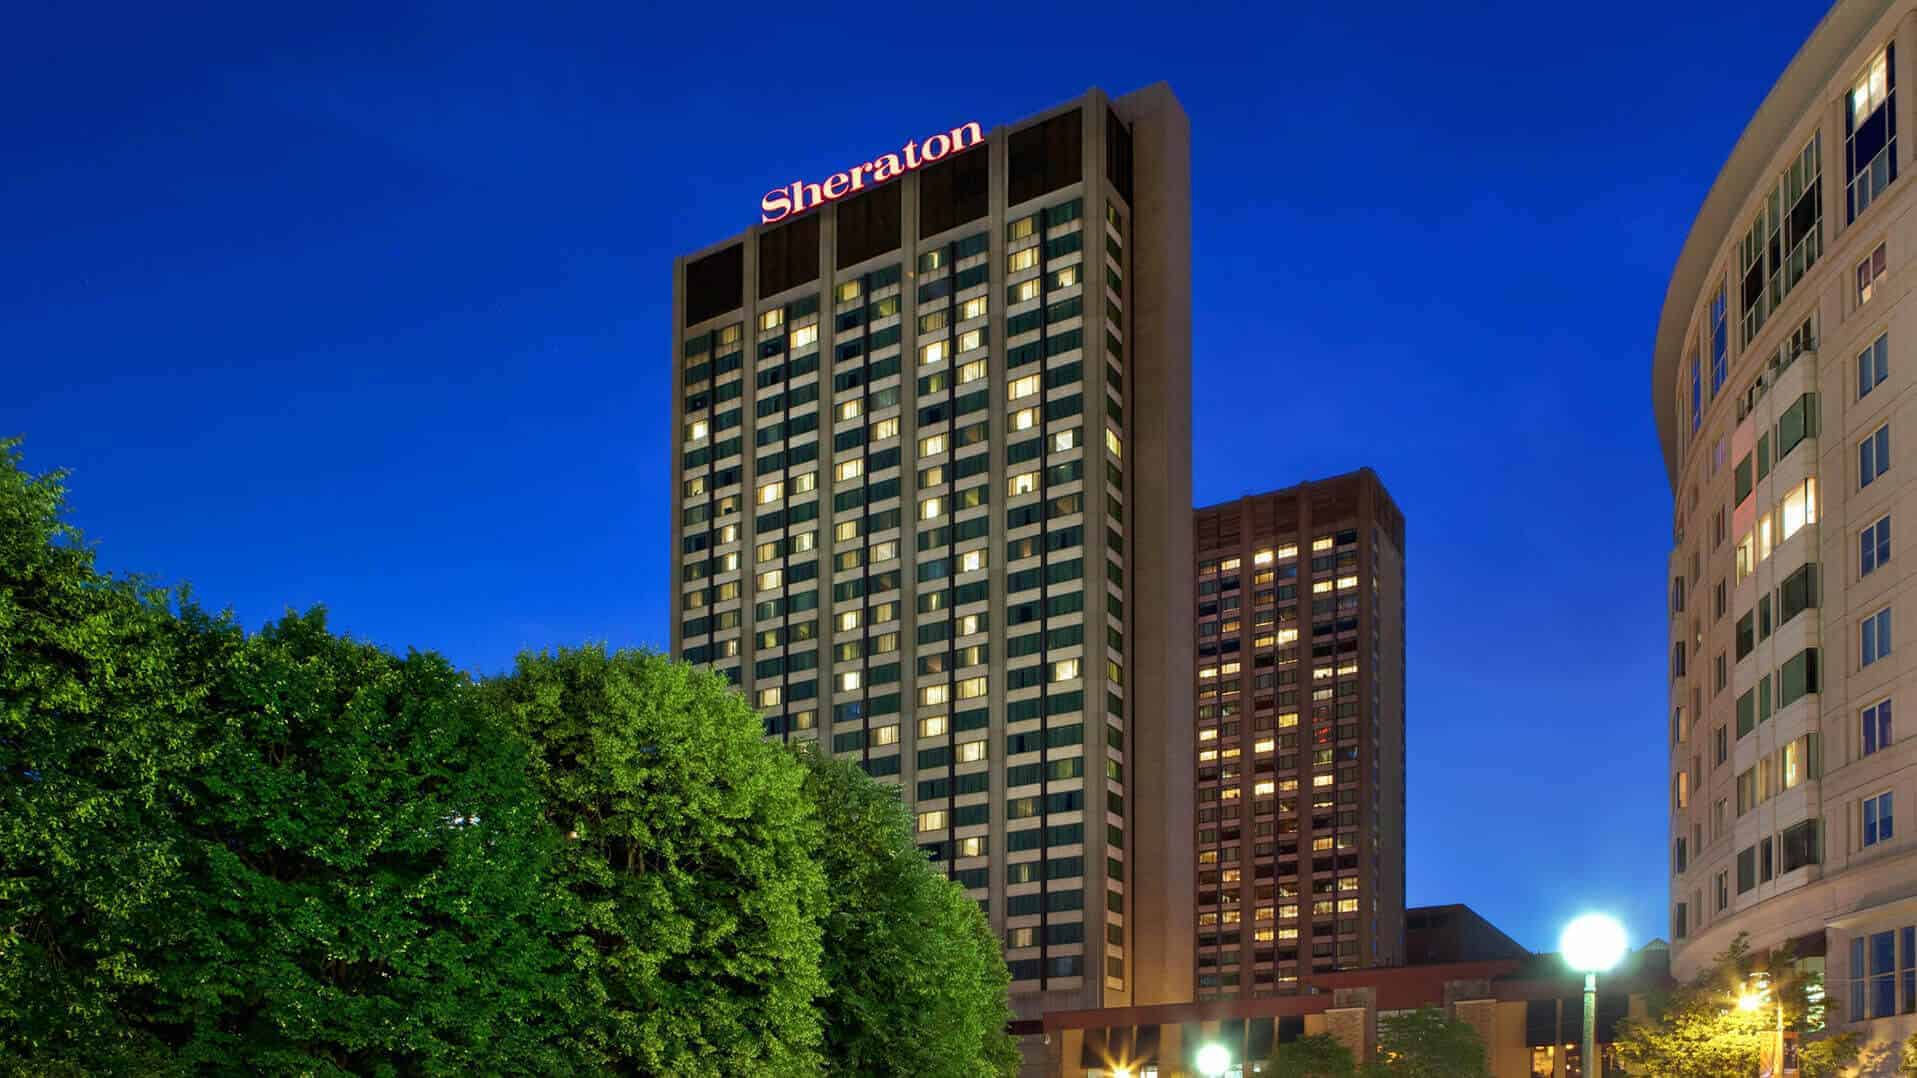 Sheraton Hotel in Boston